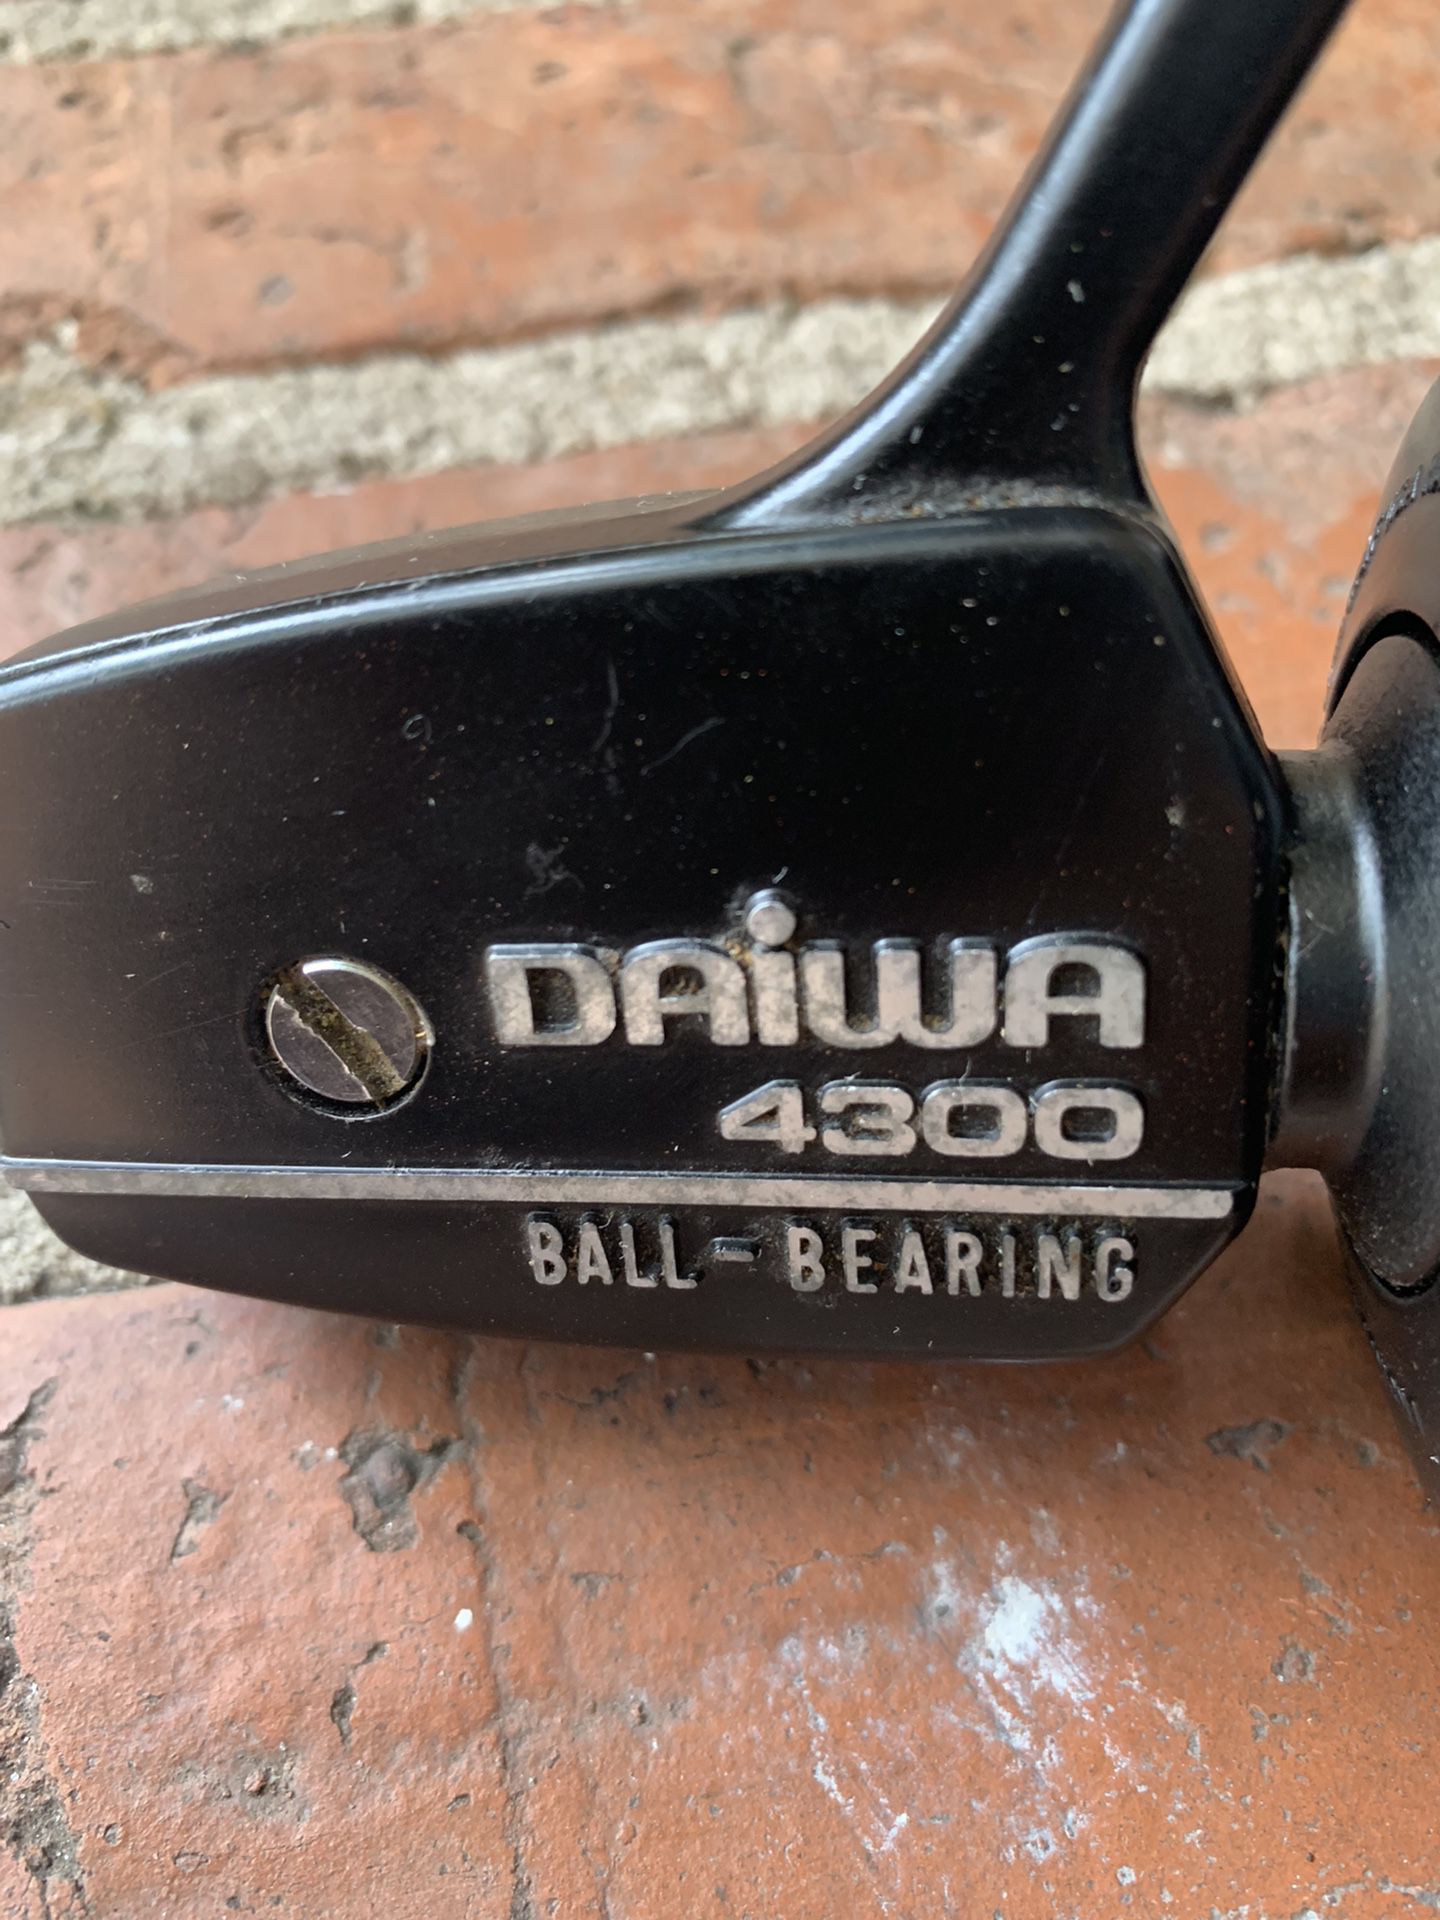 Daiwa 4300 Fishing Reel 